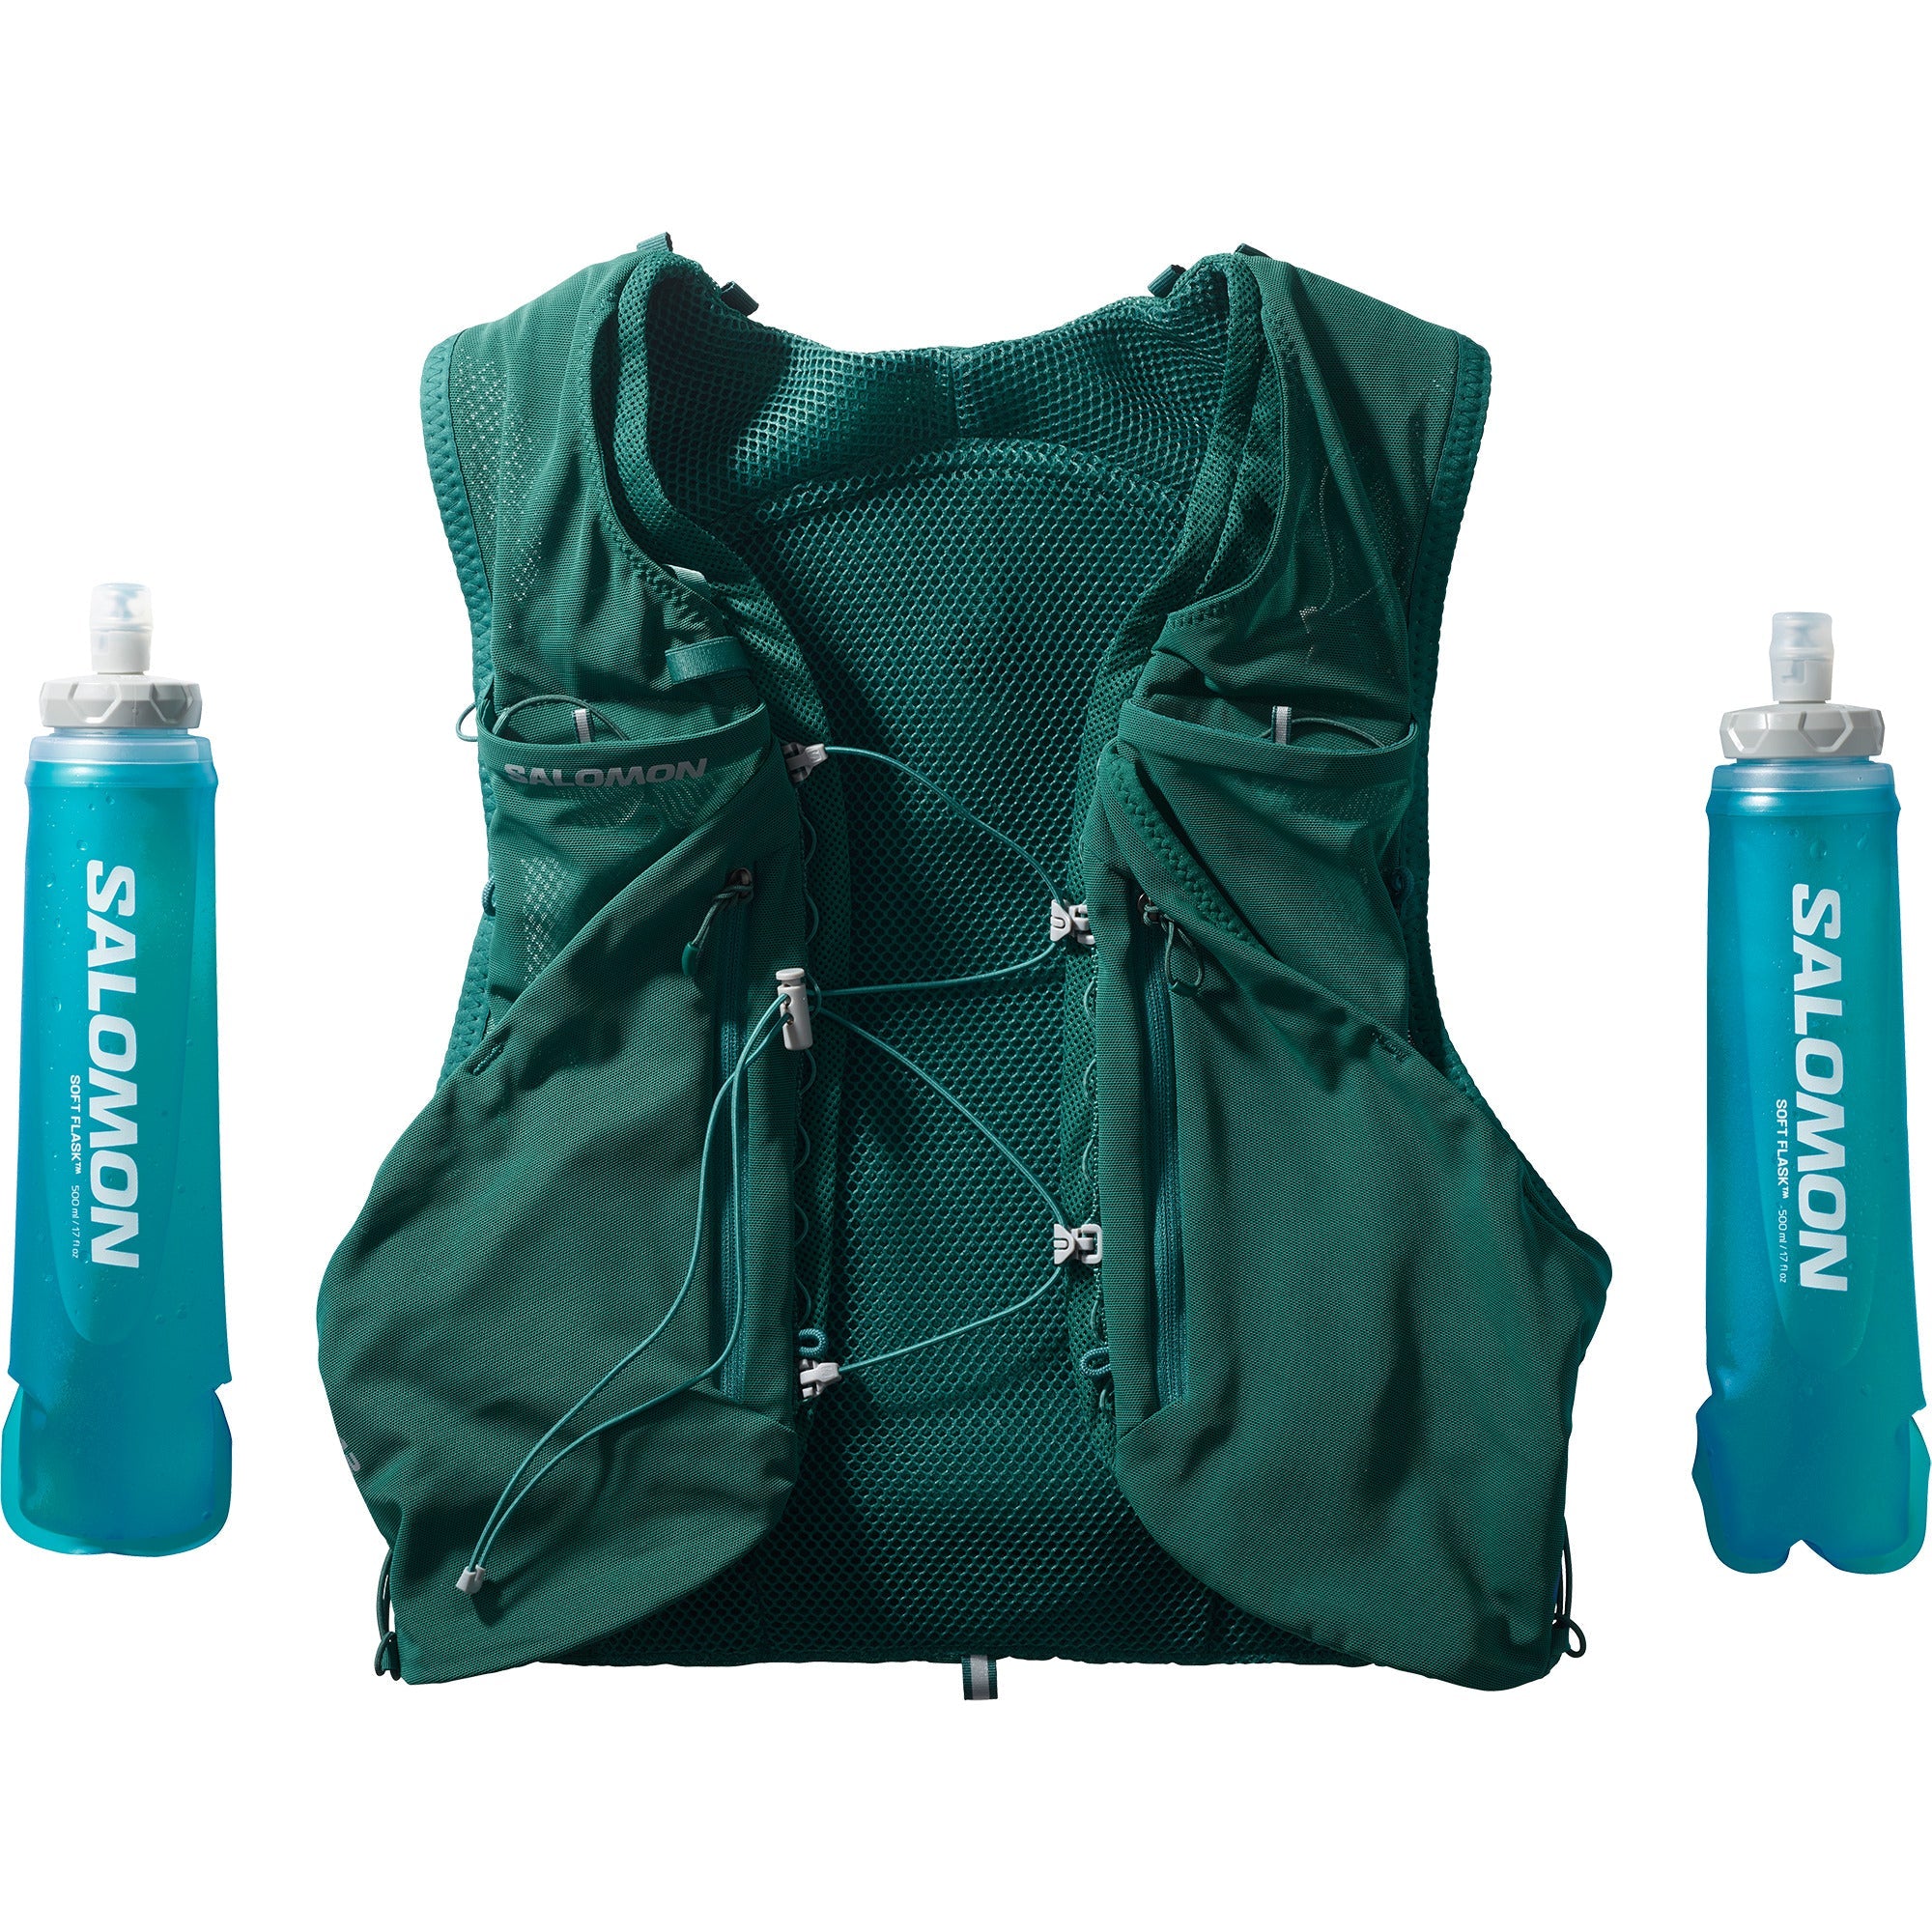 Salomon Advanced Skin 12 Hydration Pack HYDRATION - Packs PACIFIC